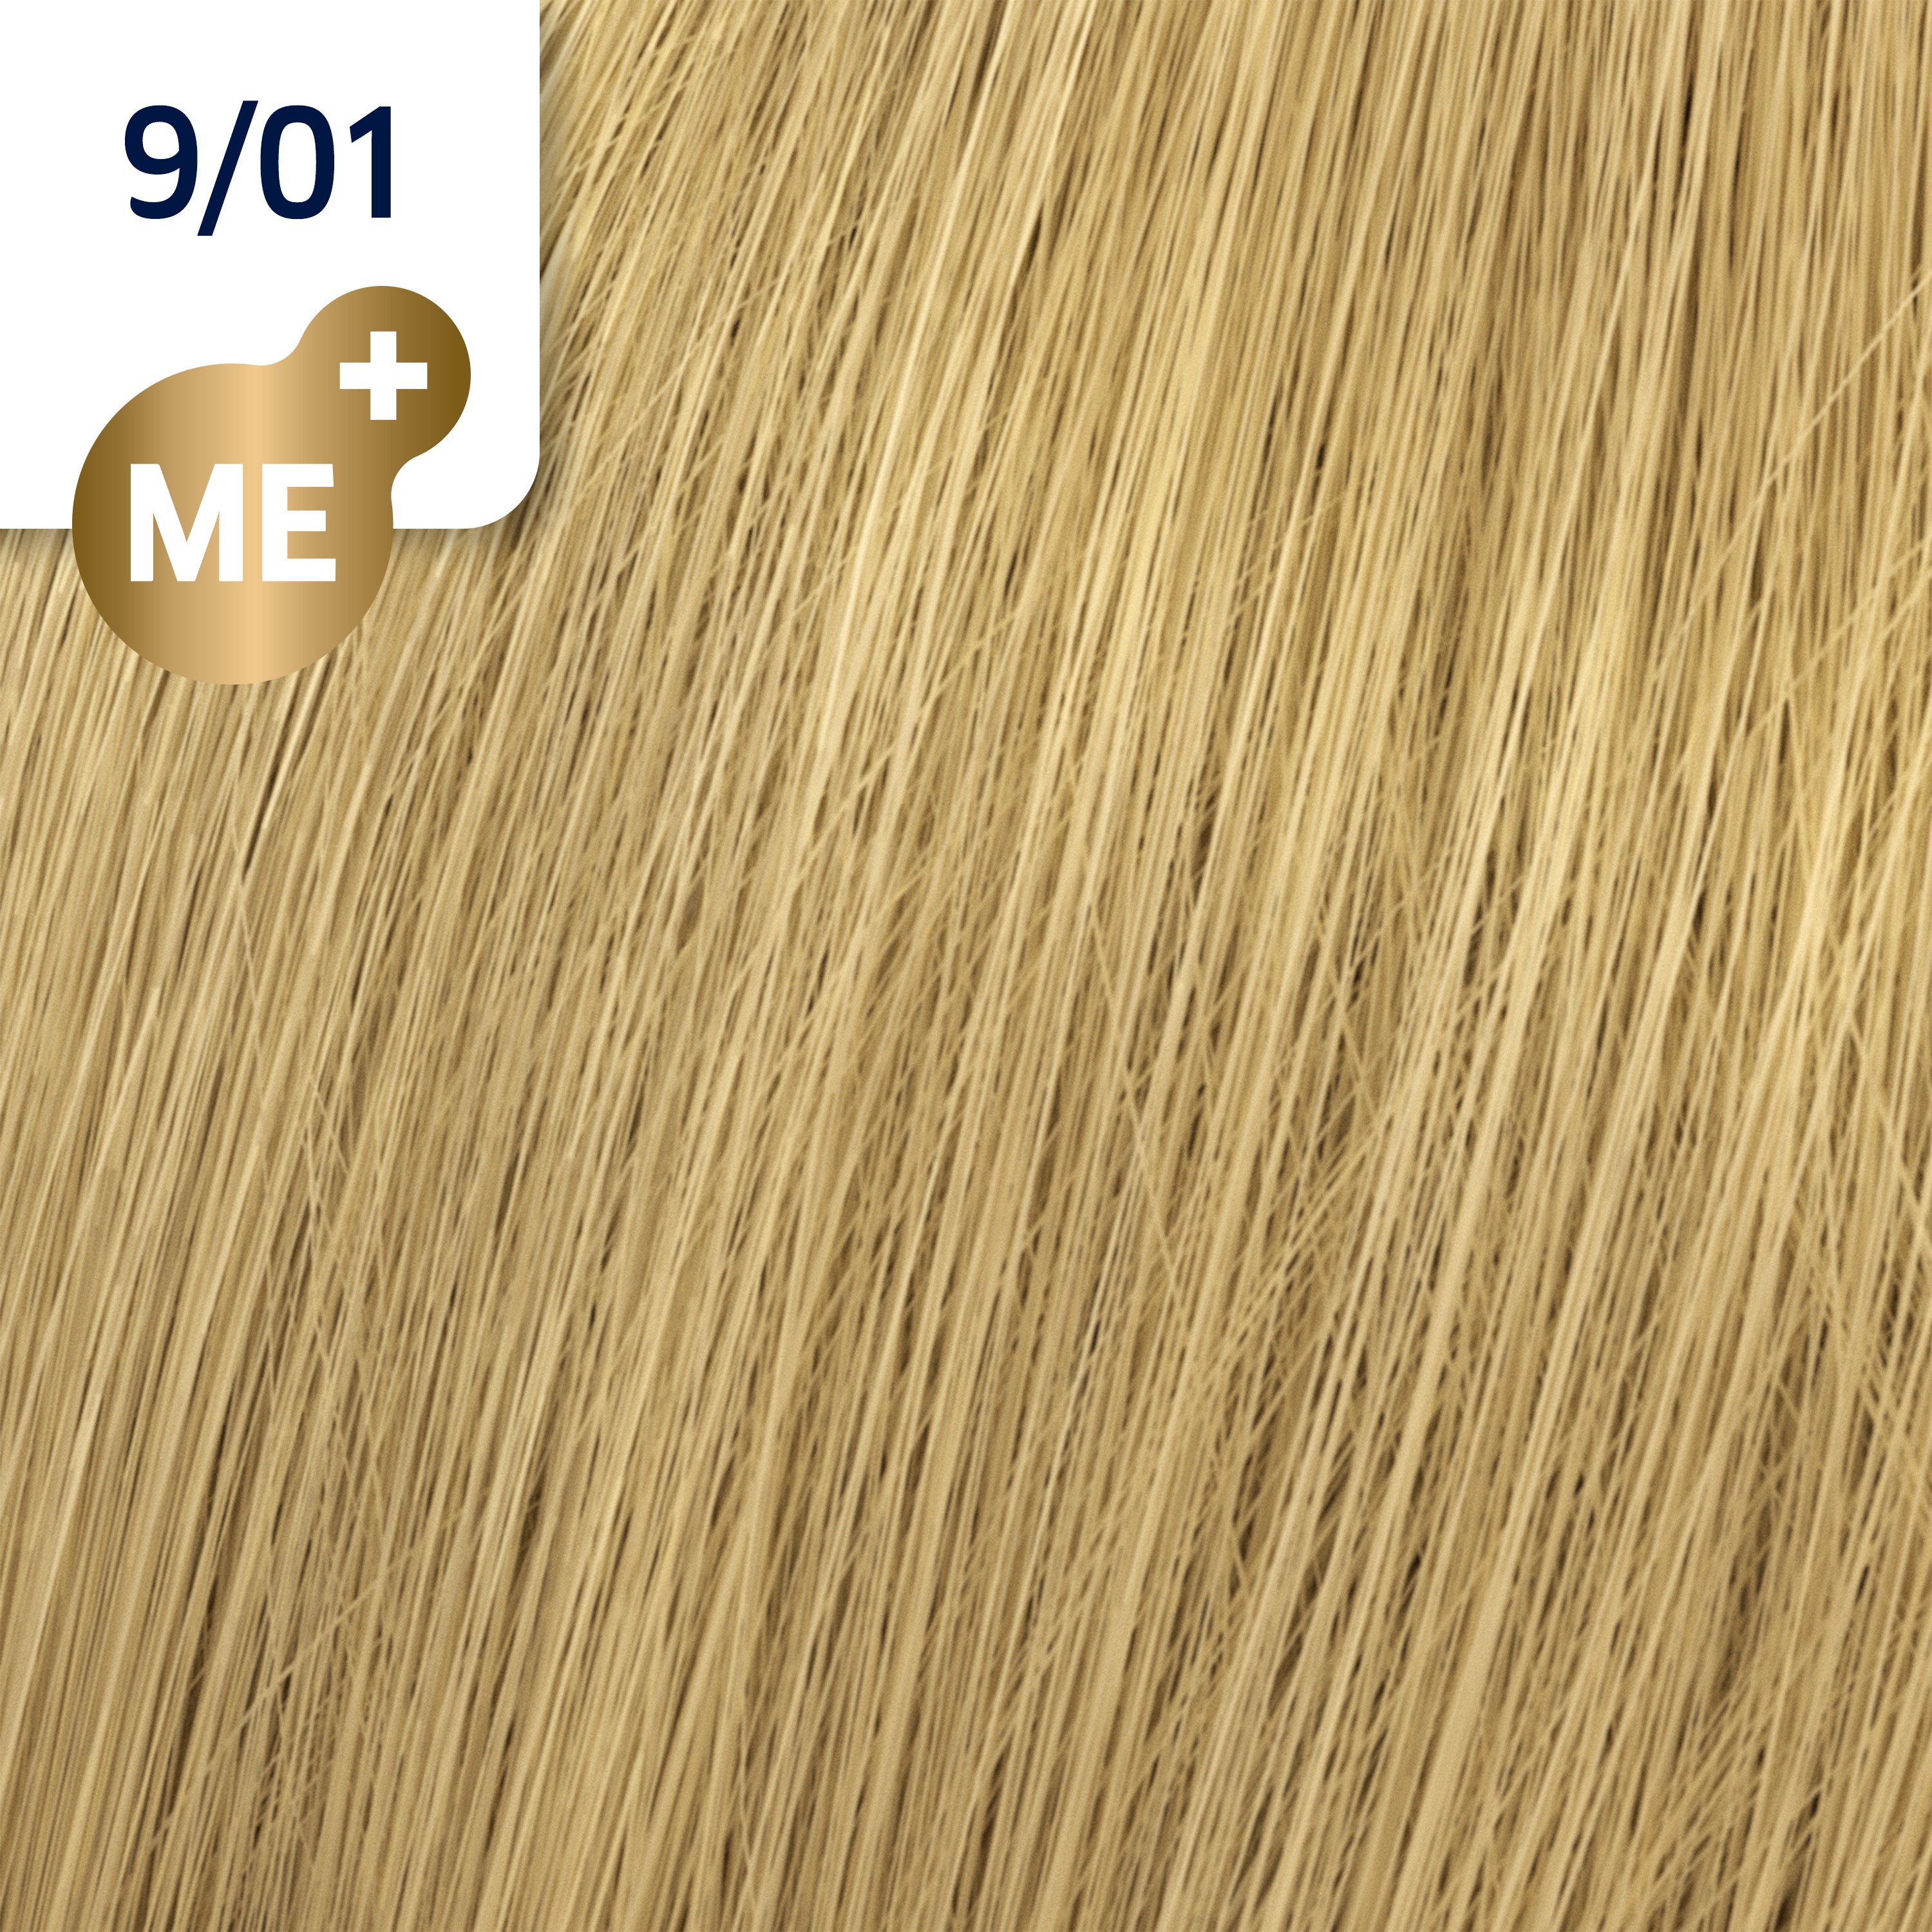 Wella Koleston Perfect Me+ Pure Naturals 9/01 Very Light Natural - Ash Blonde